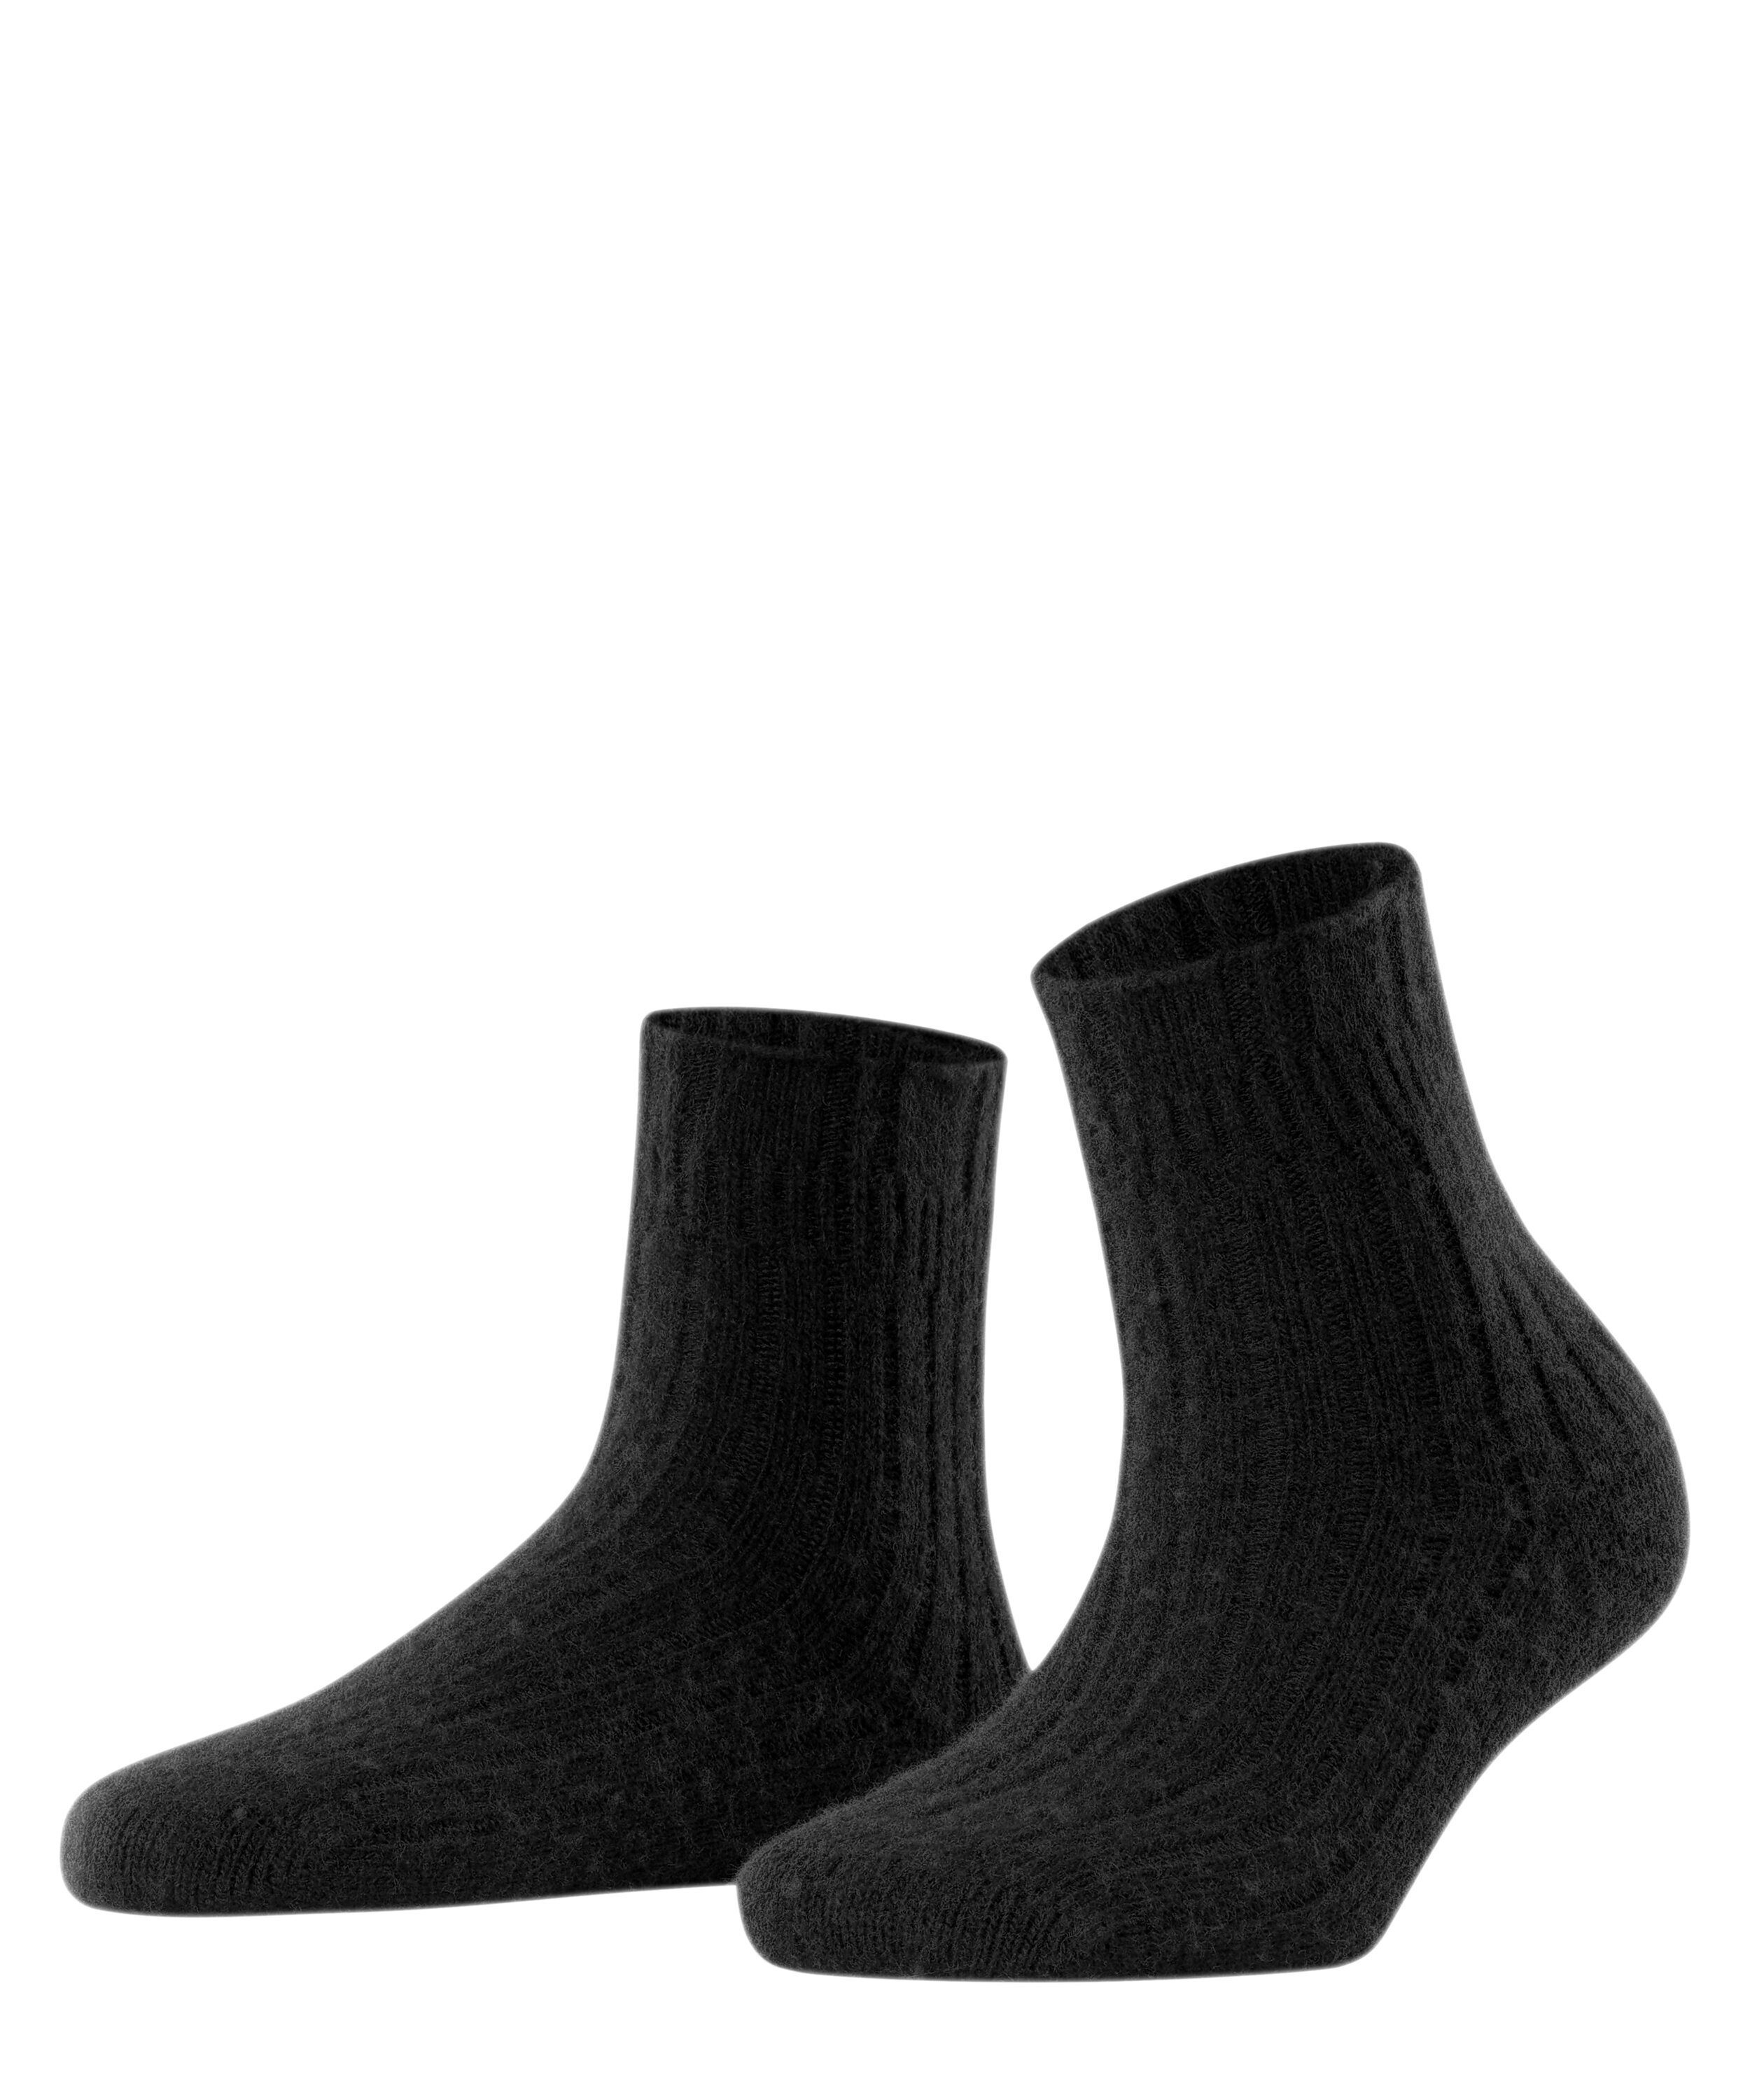 Wäsche/Bademode Socken FALKE Socken Bedsock Rib (1-Paar) mit Kaschmiranteil